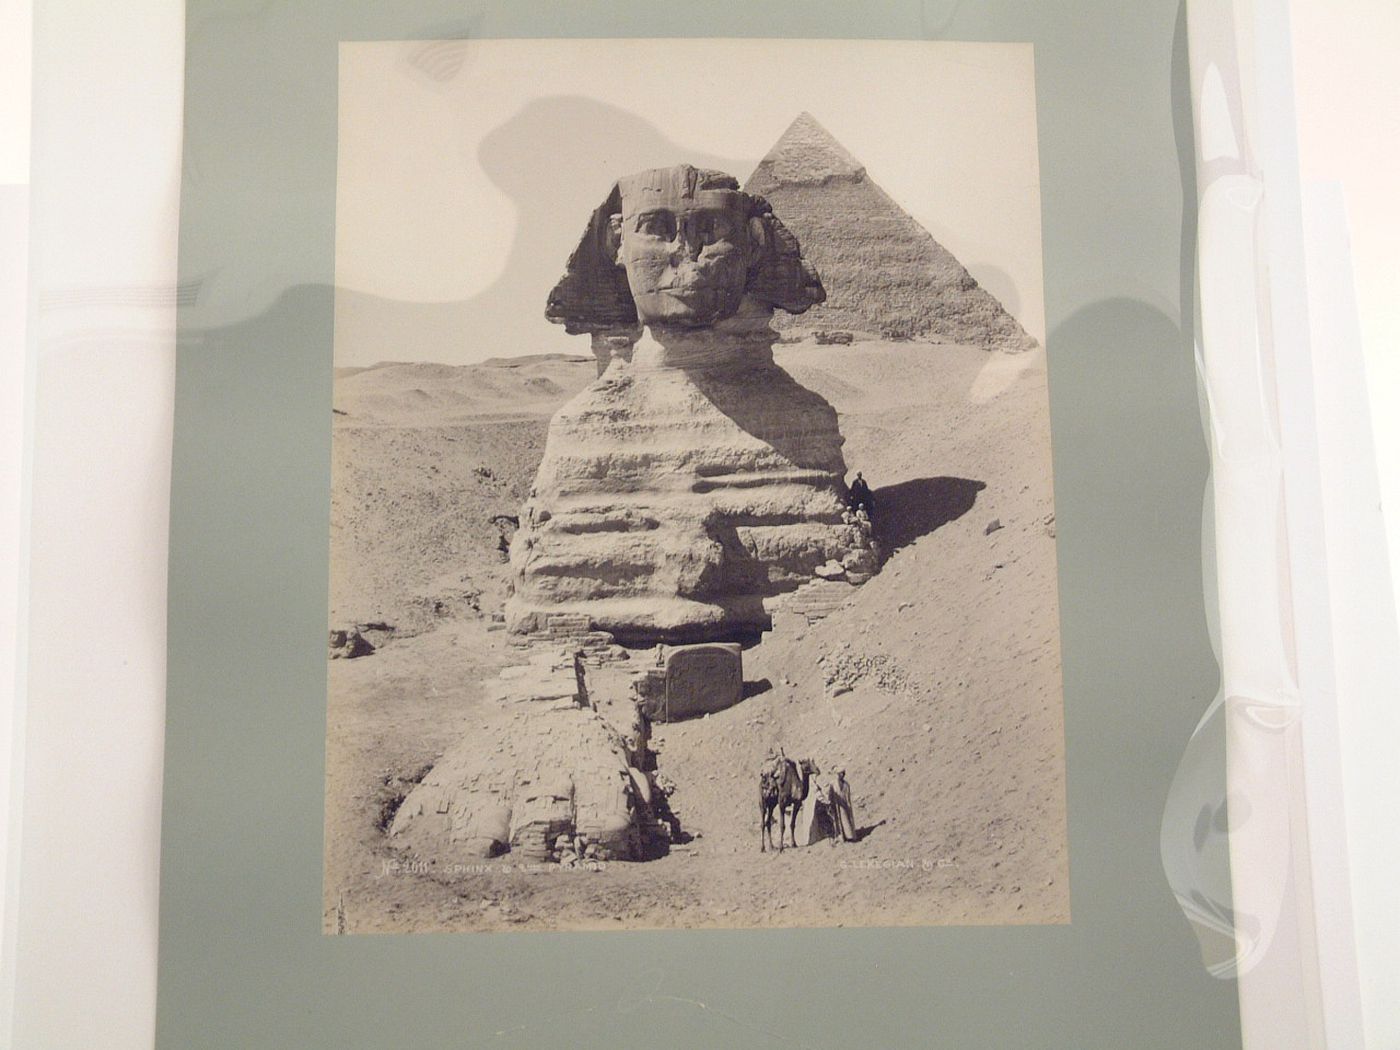 Sphinx and Pyramid, Giza, Egypt